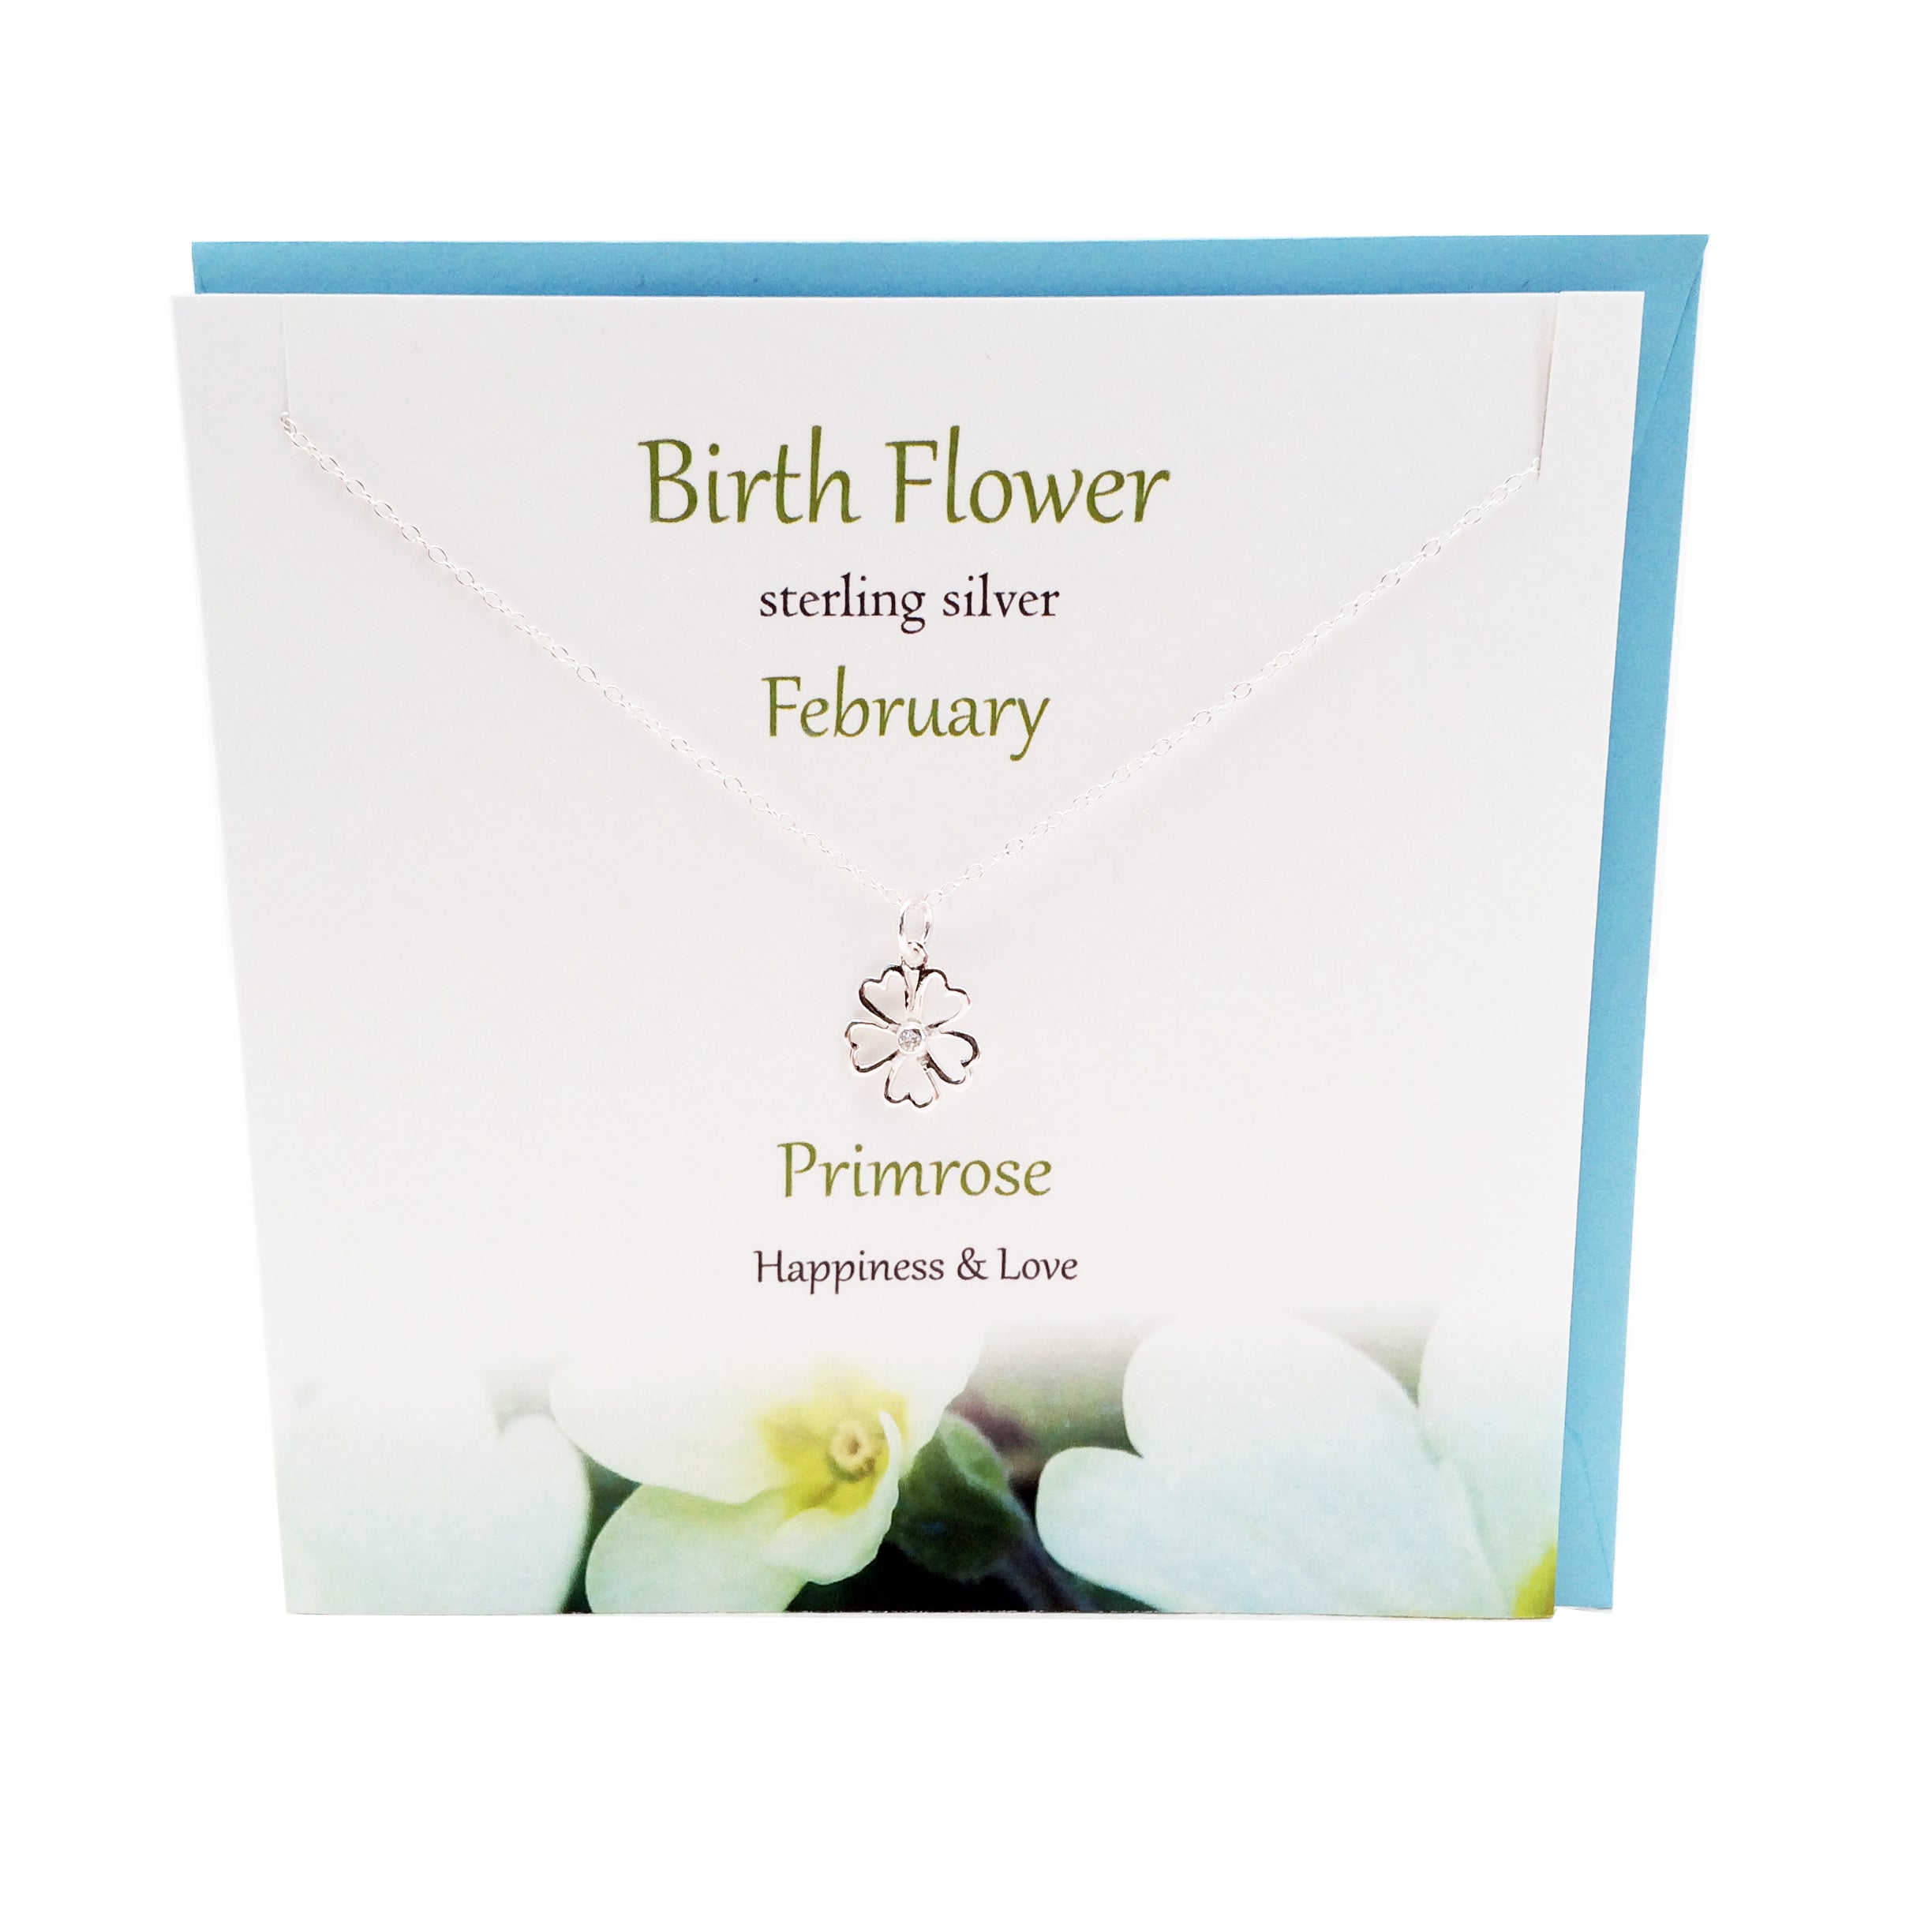 February Birthflower Primrose silver necklace | The Silver Studio Scotland